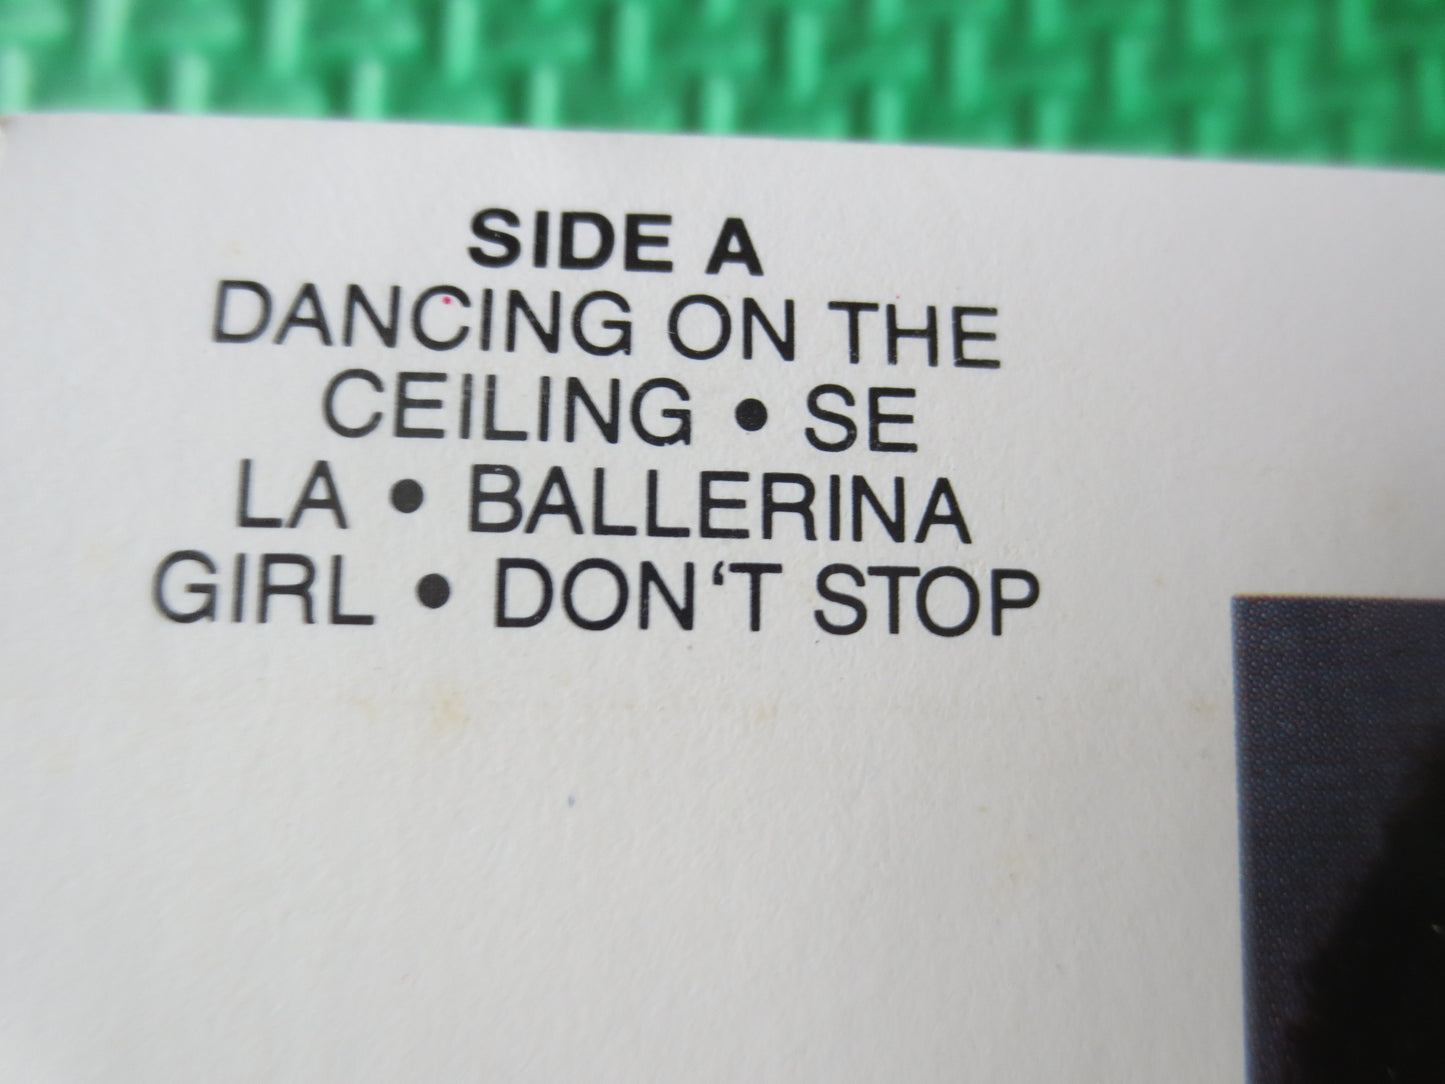 LIONEL RICHIE Tape, DANCING on the Ceiling, Lionel Richie Album, Lionel Richie Music, Cassette, Rock Cassette, 1985 Cassette